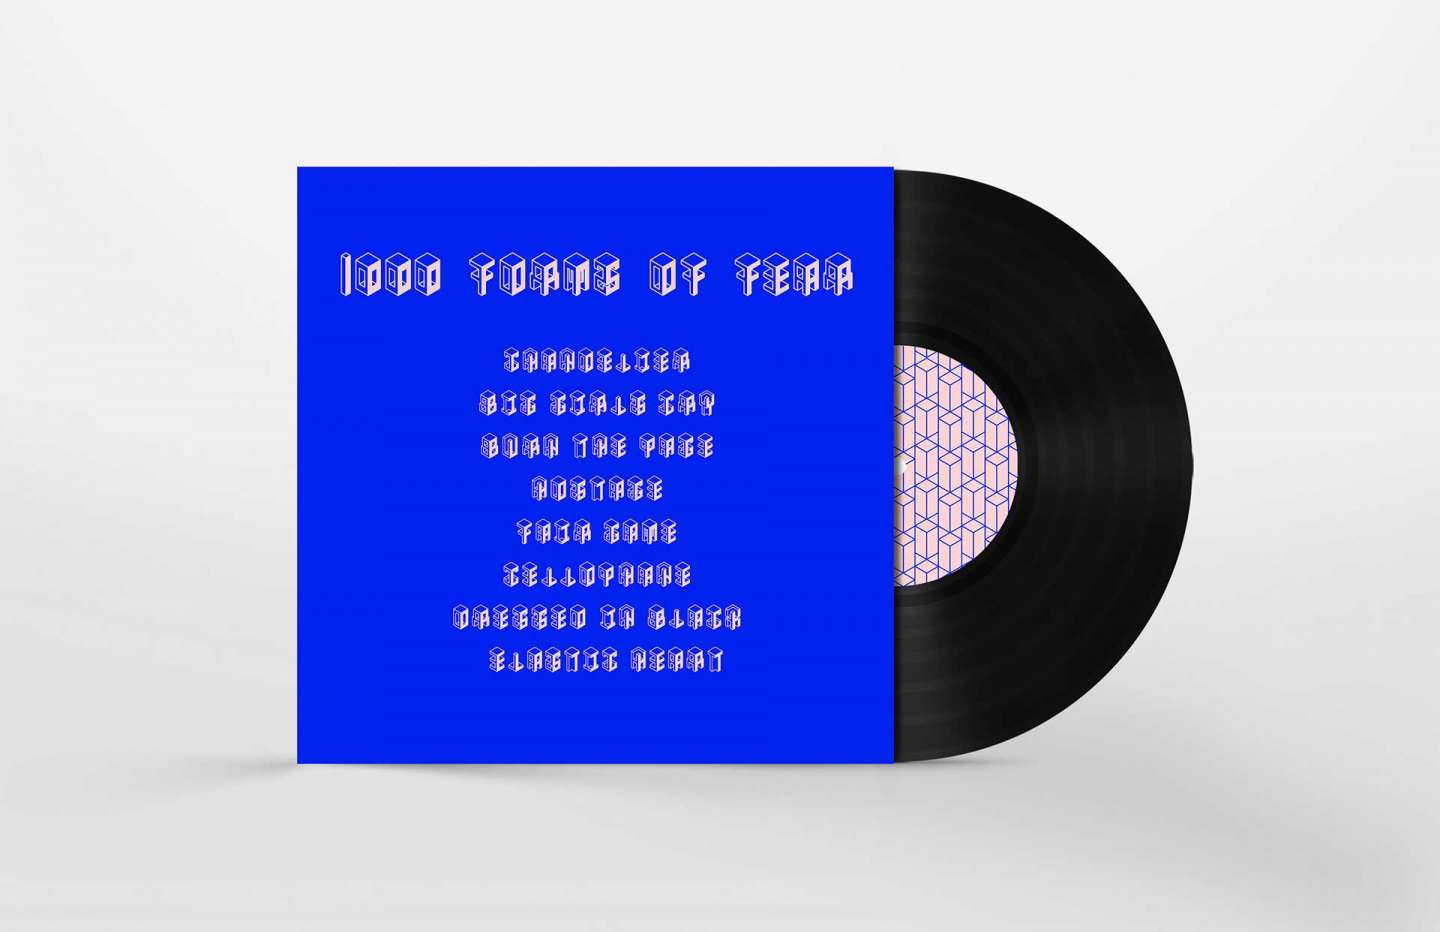 Vinyl Record design + Boxy Font